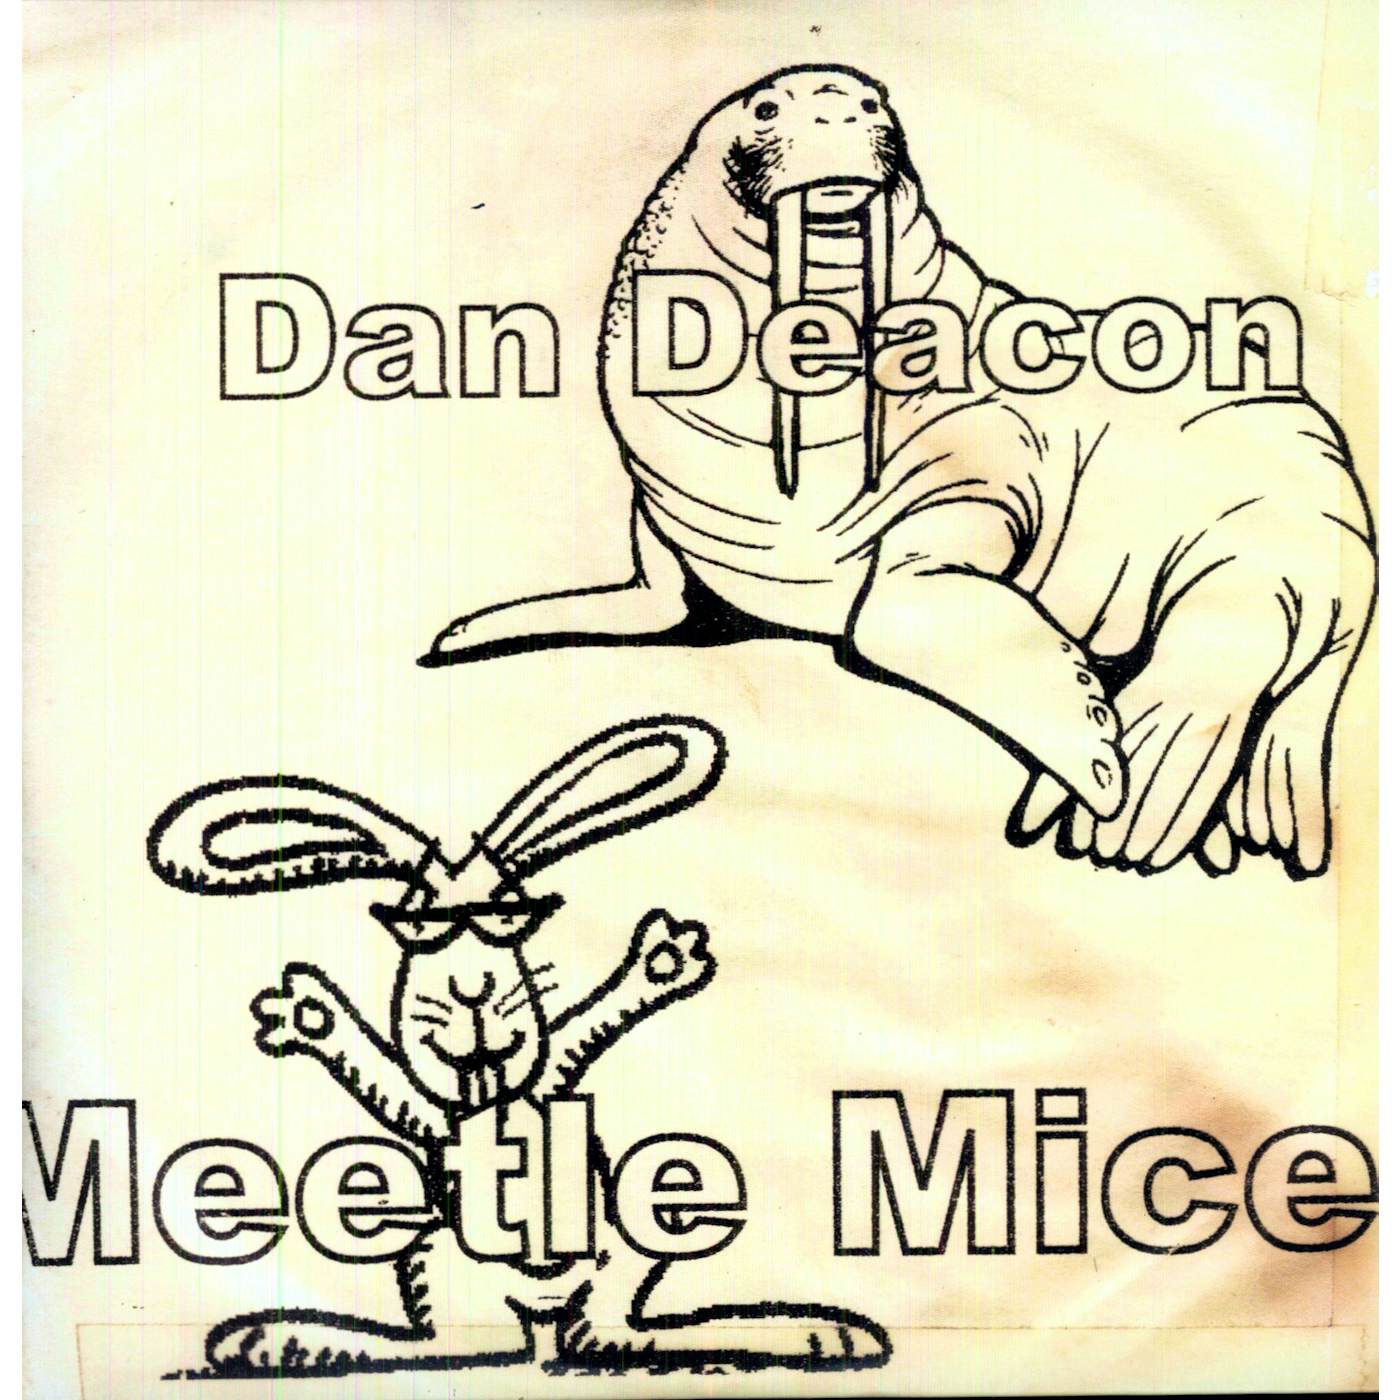 Dan Deacon Meetle Mice Vinyl Record